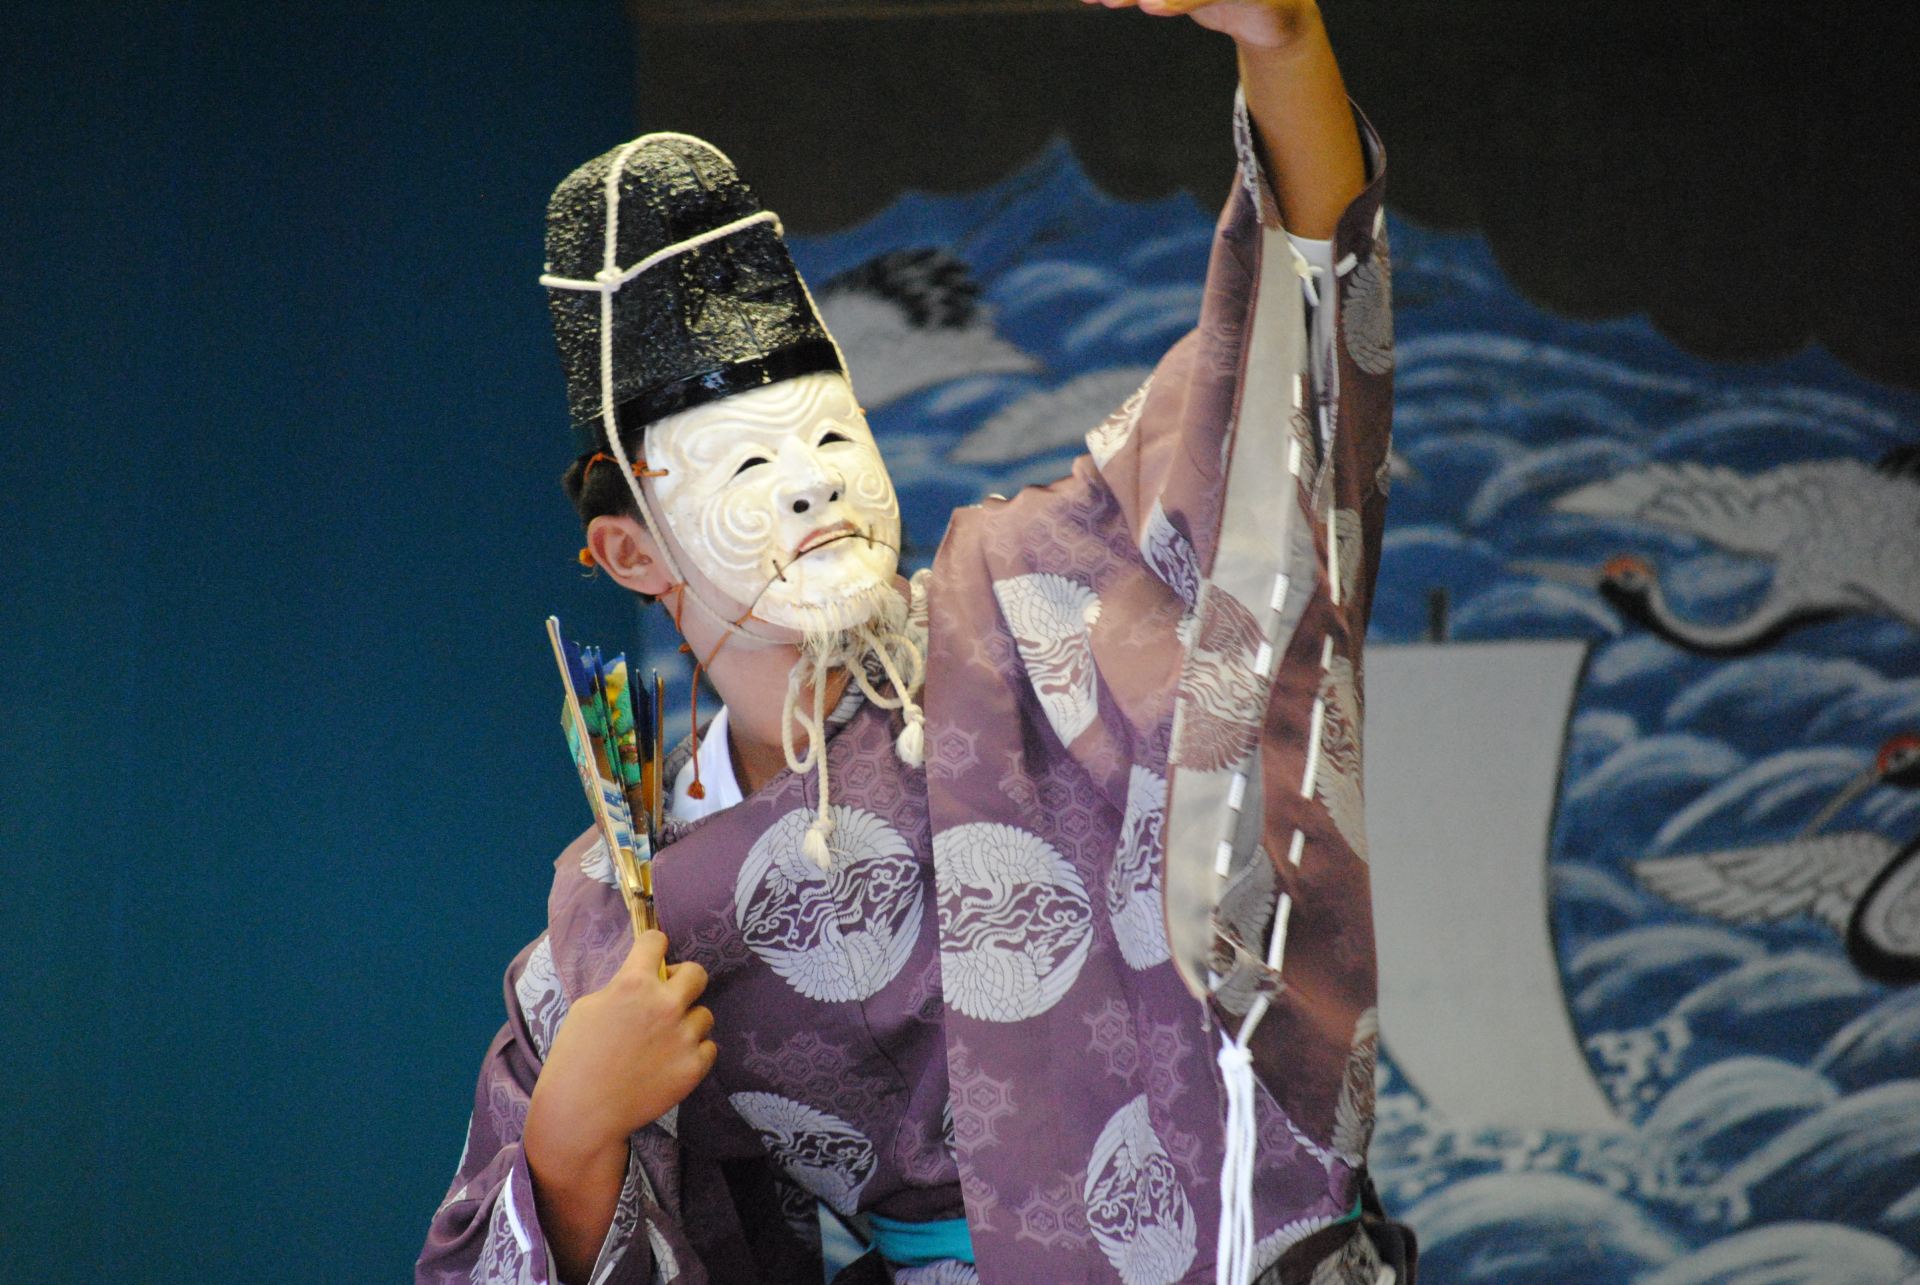 Performing the Okinoura Sanbanso, a dynamic, powerful dance.